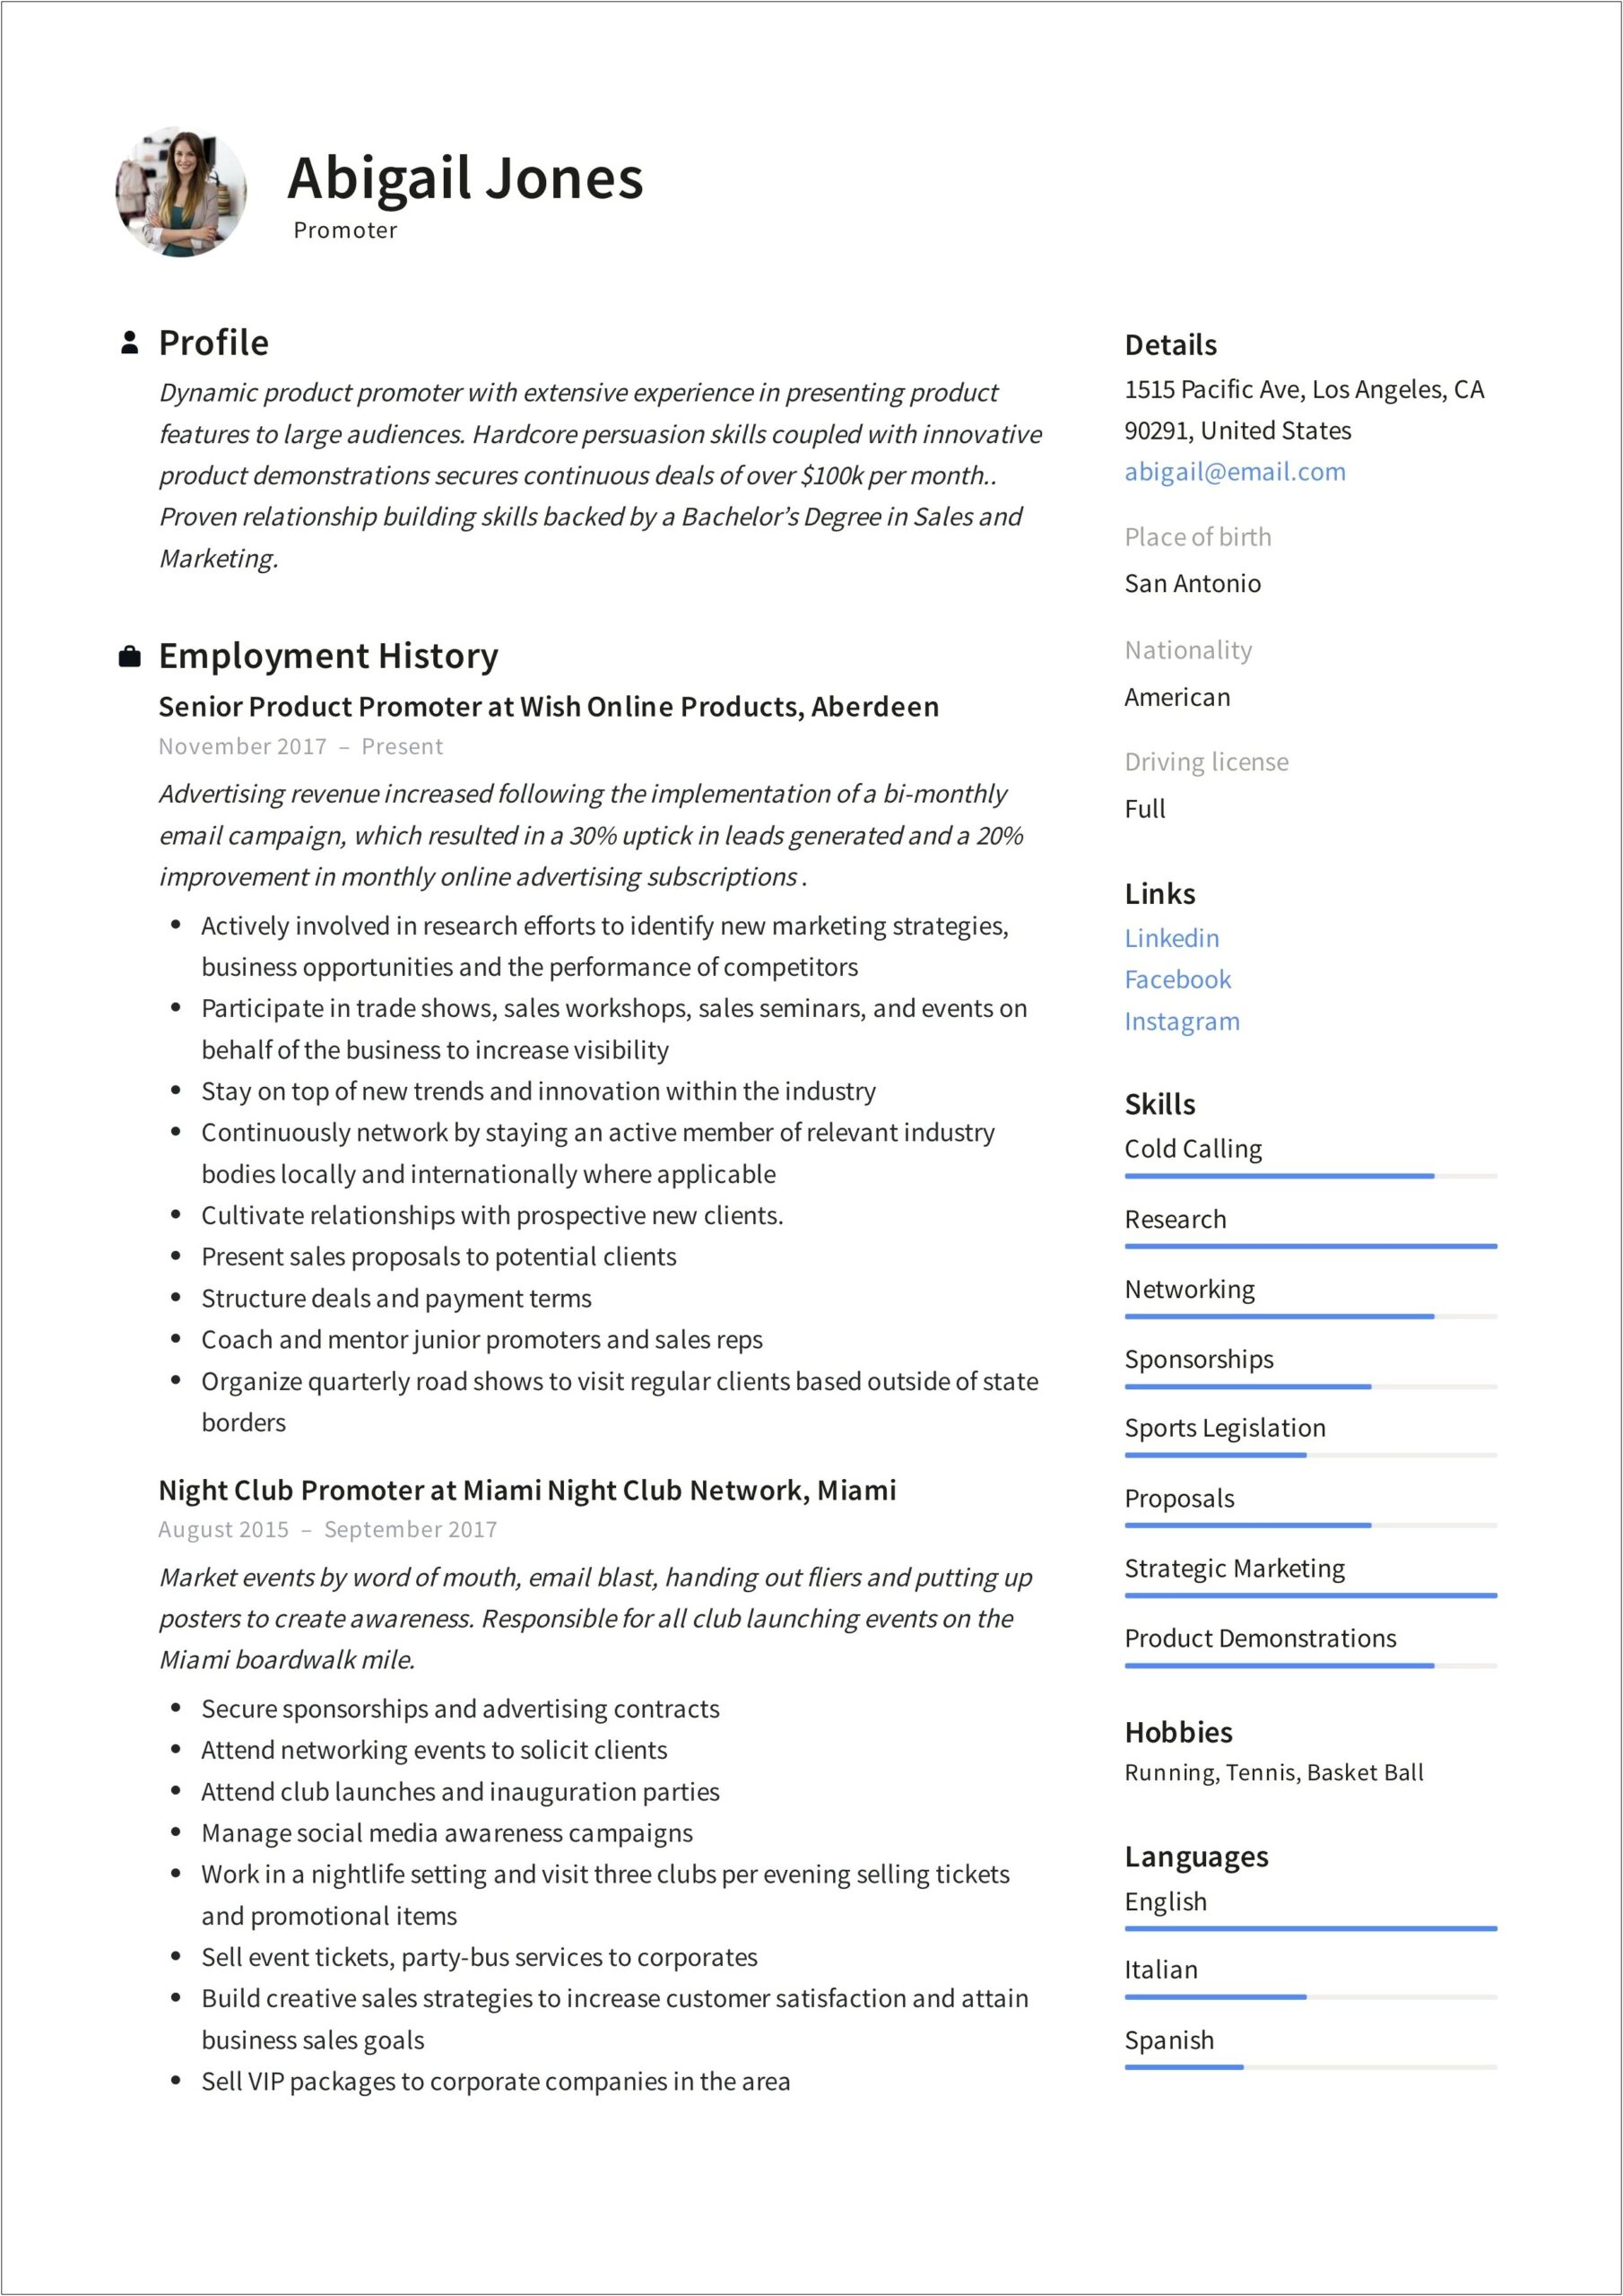 Travel Agency Company Profile Sample Resume